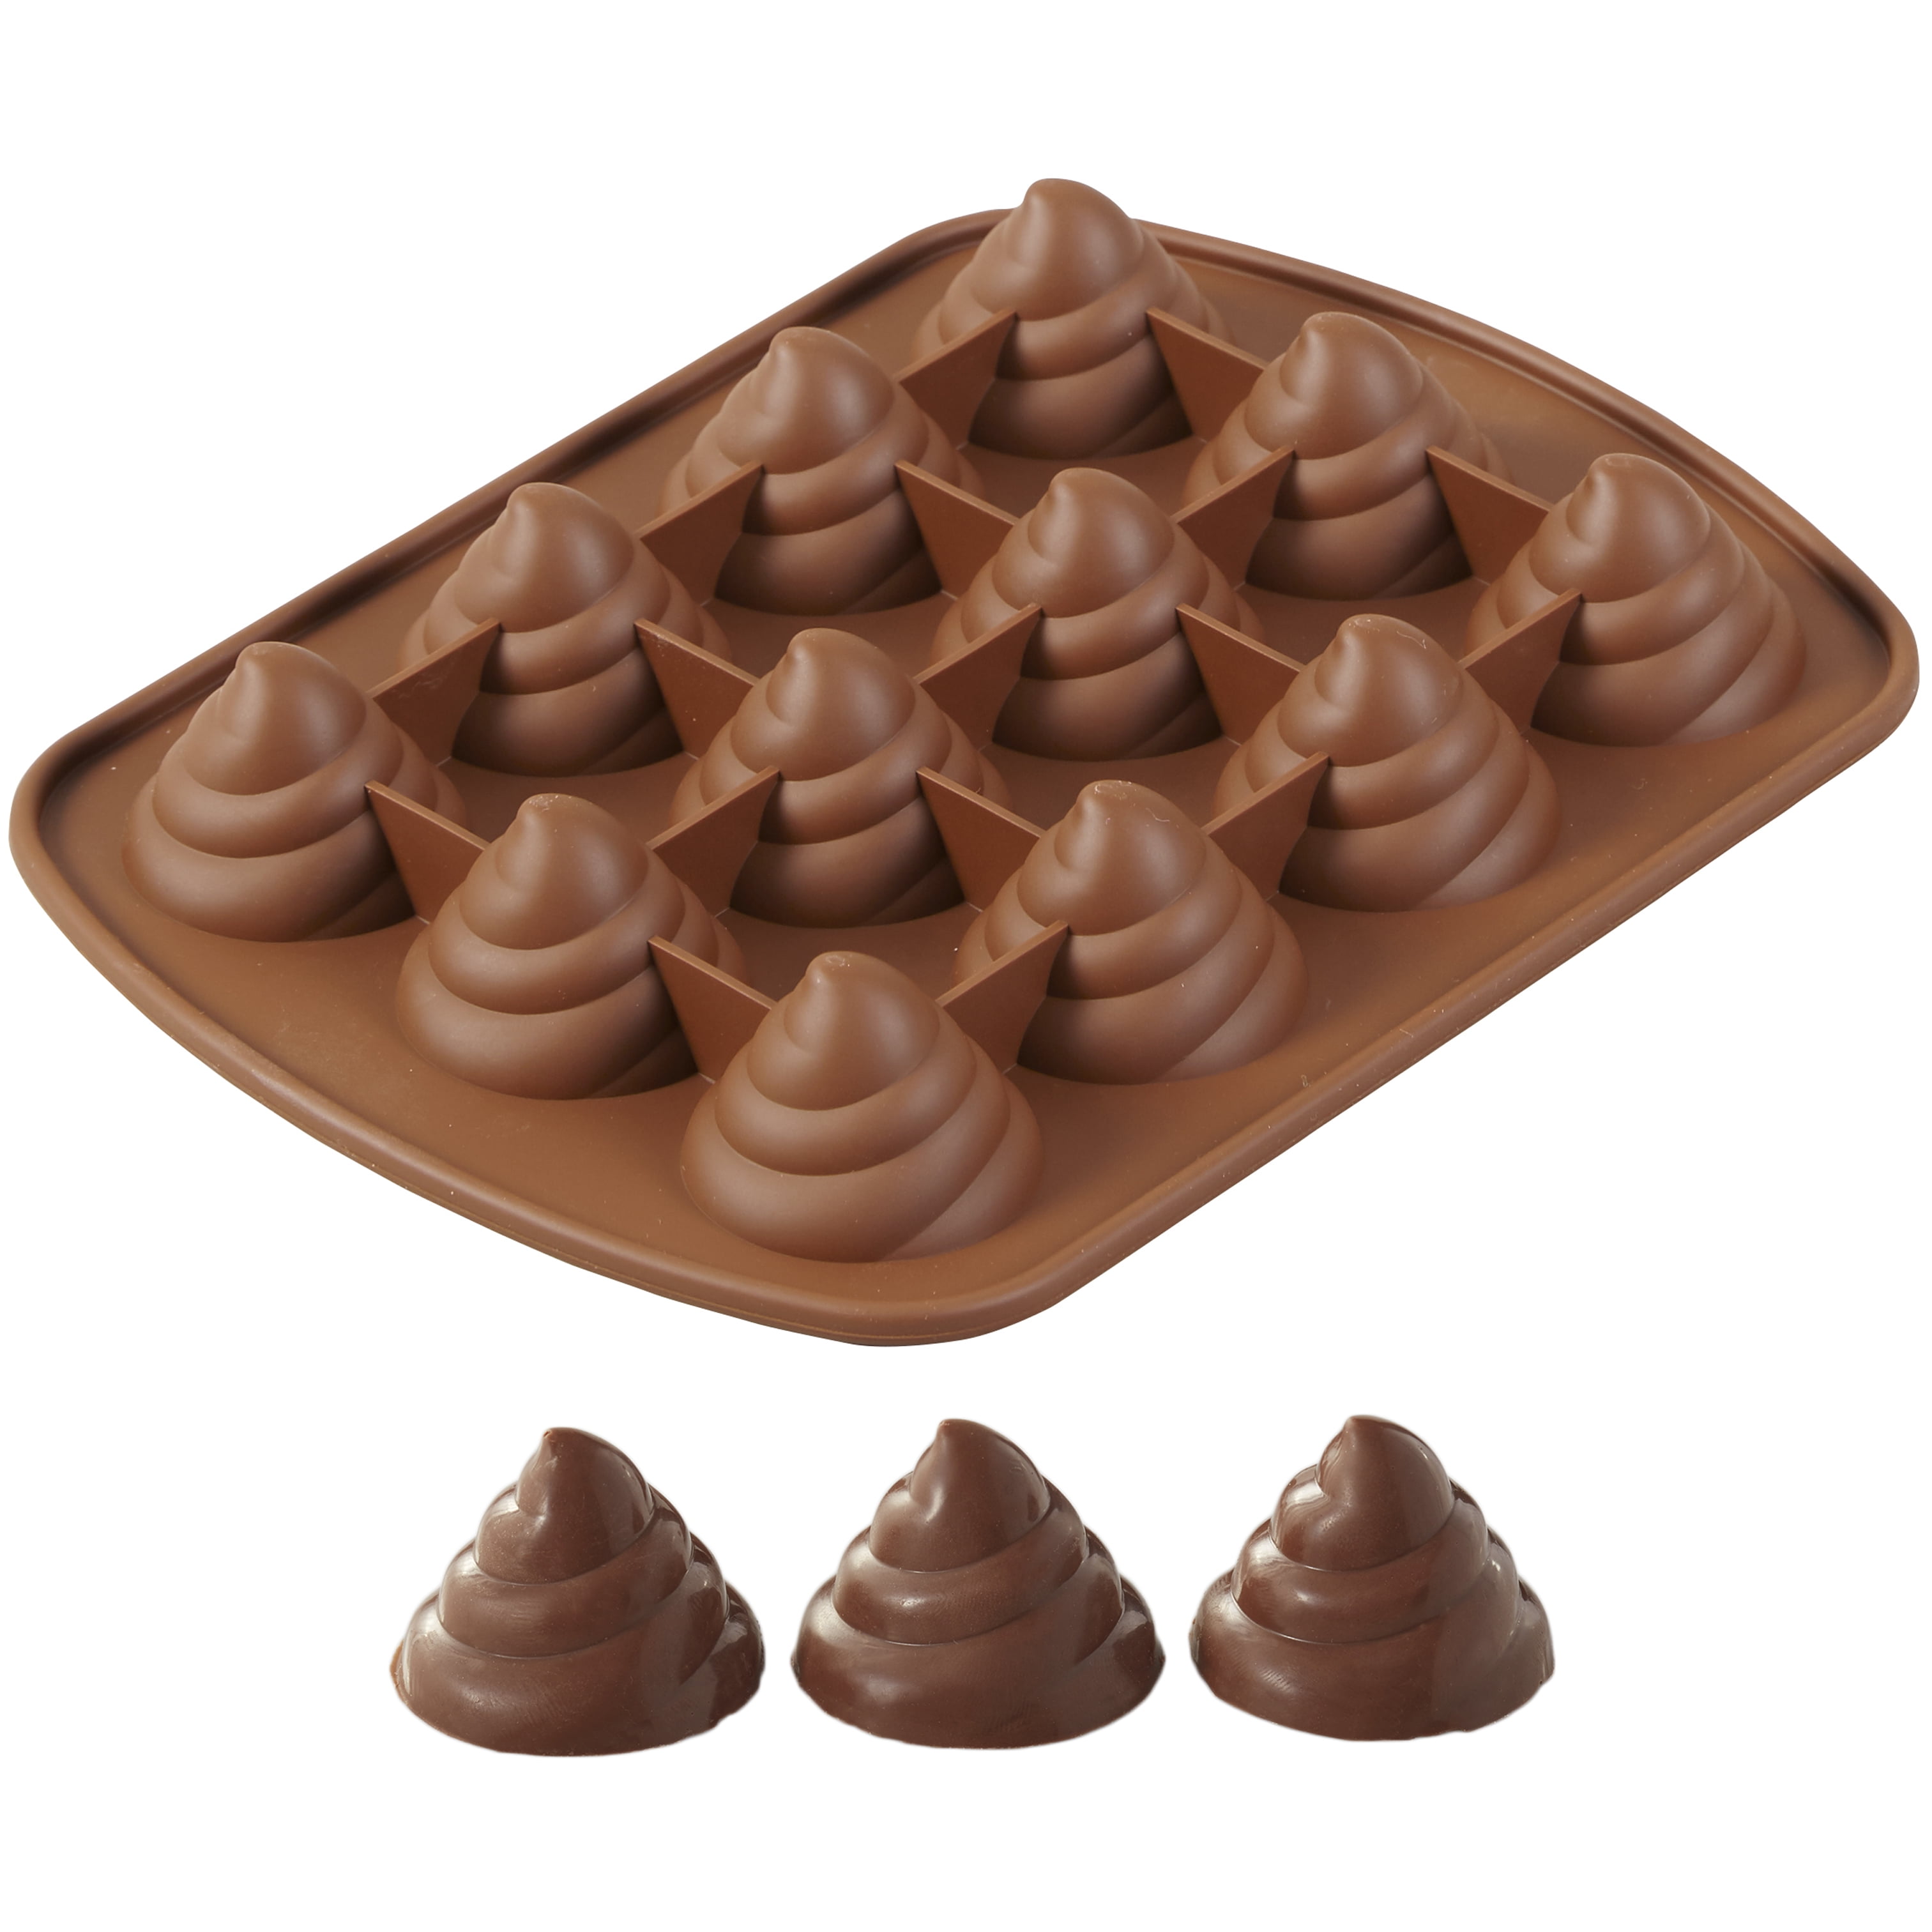 Turds Emoji Lollipop Chocolate Candy Mold 3458 NEW 